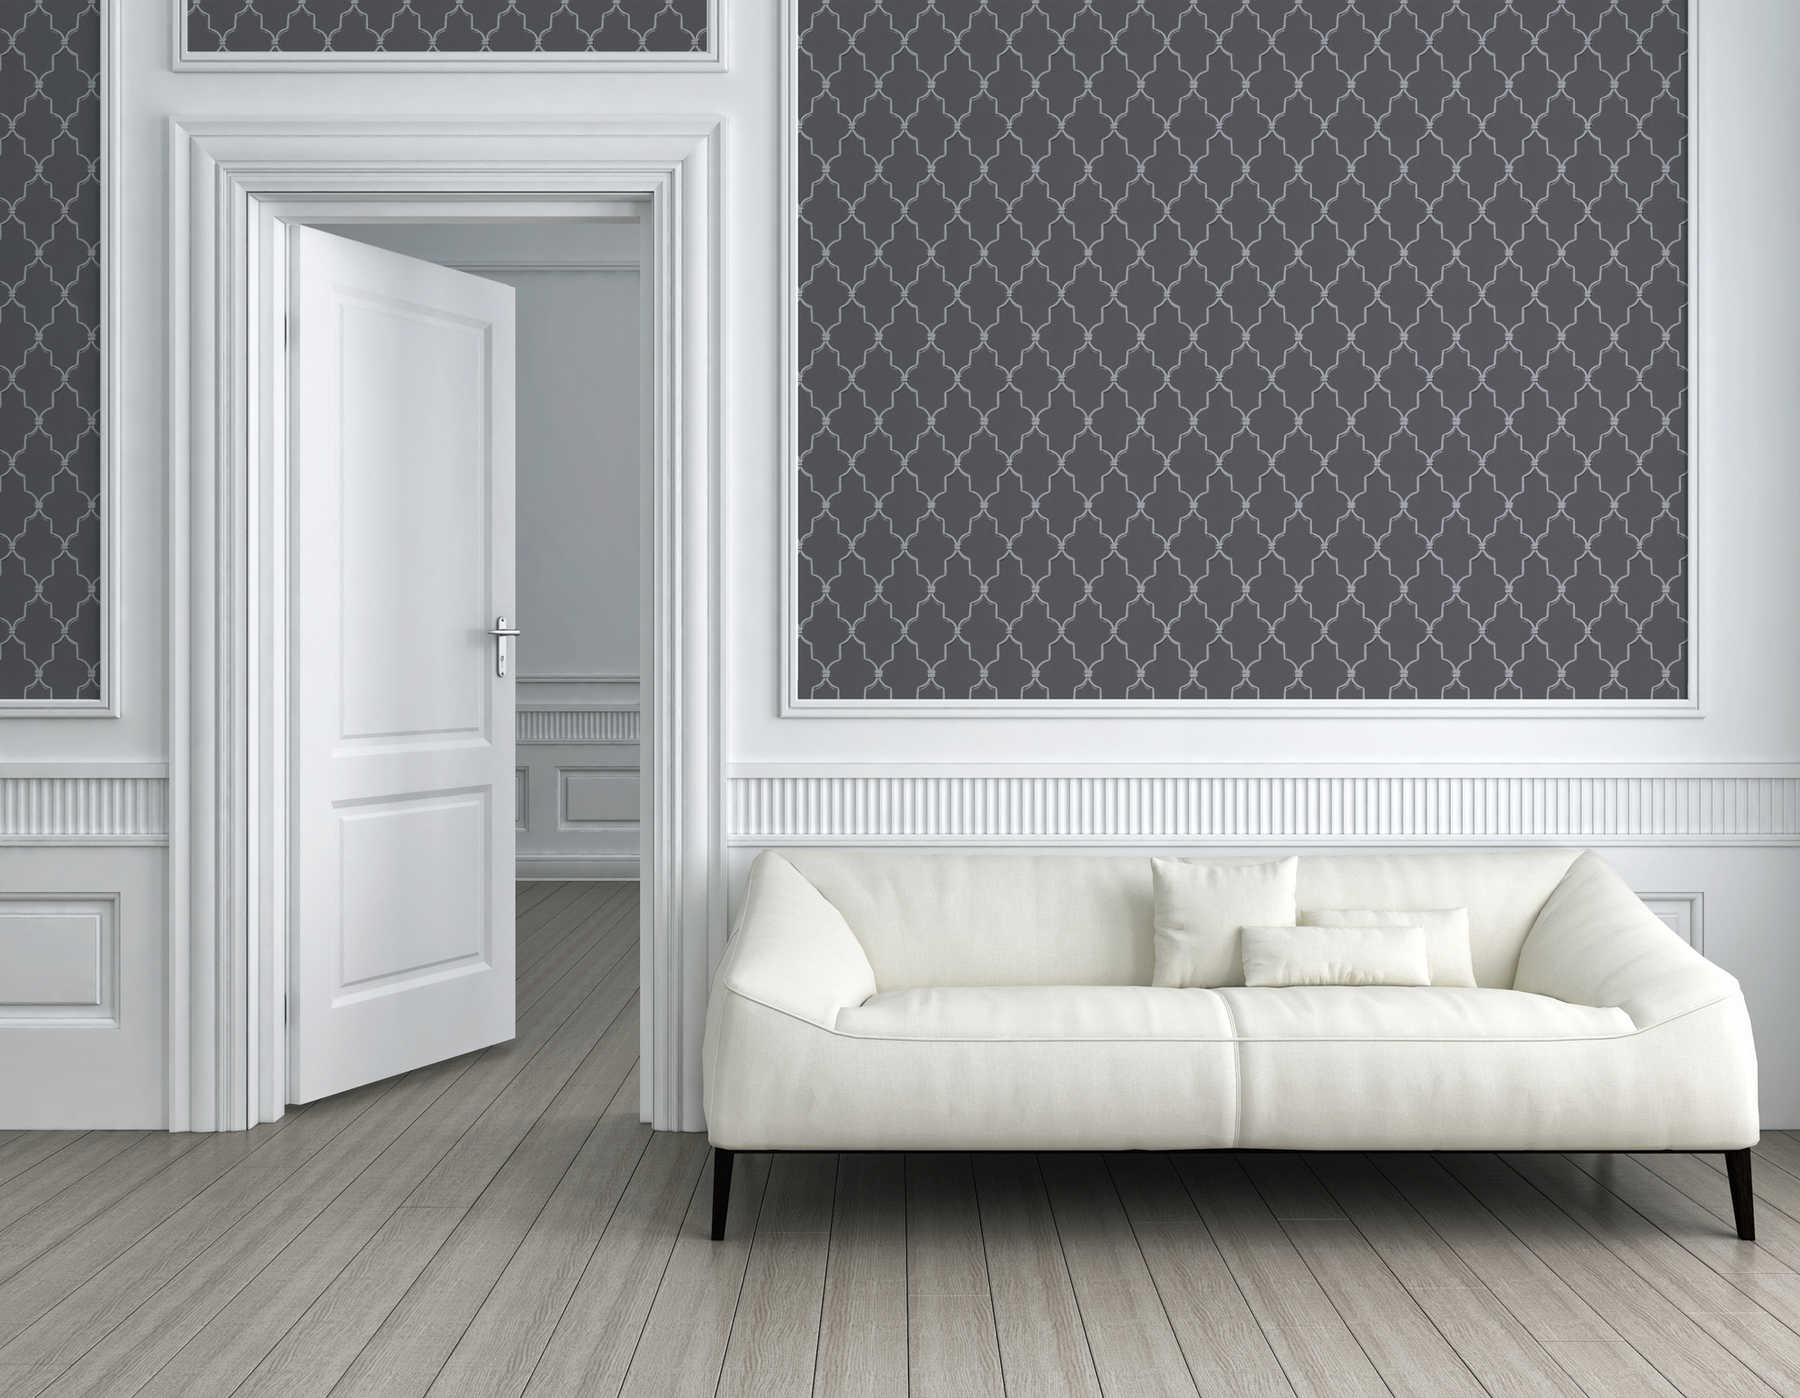             Art deco wallpaper with metallic pattern in retro style - grey
        